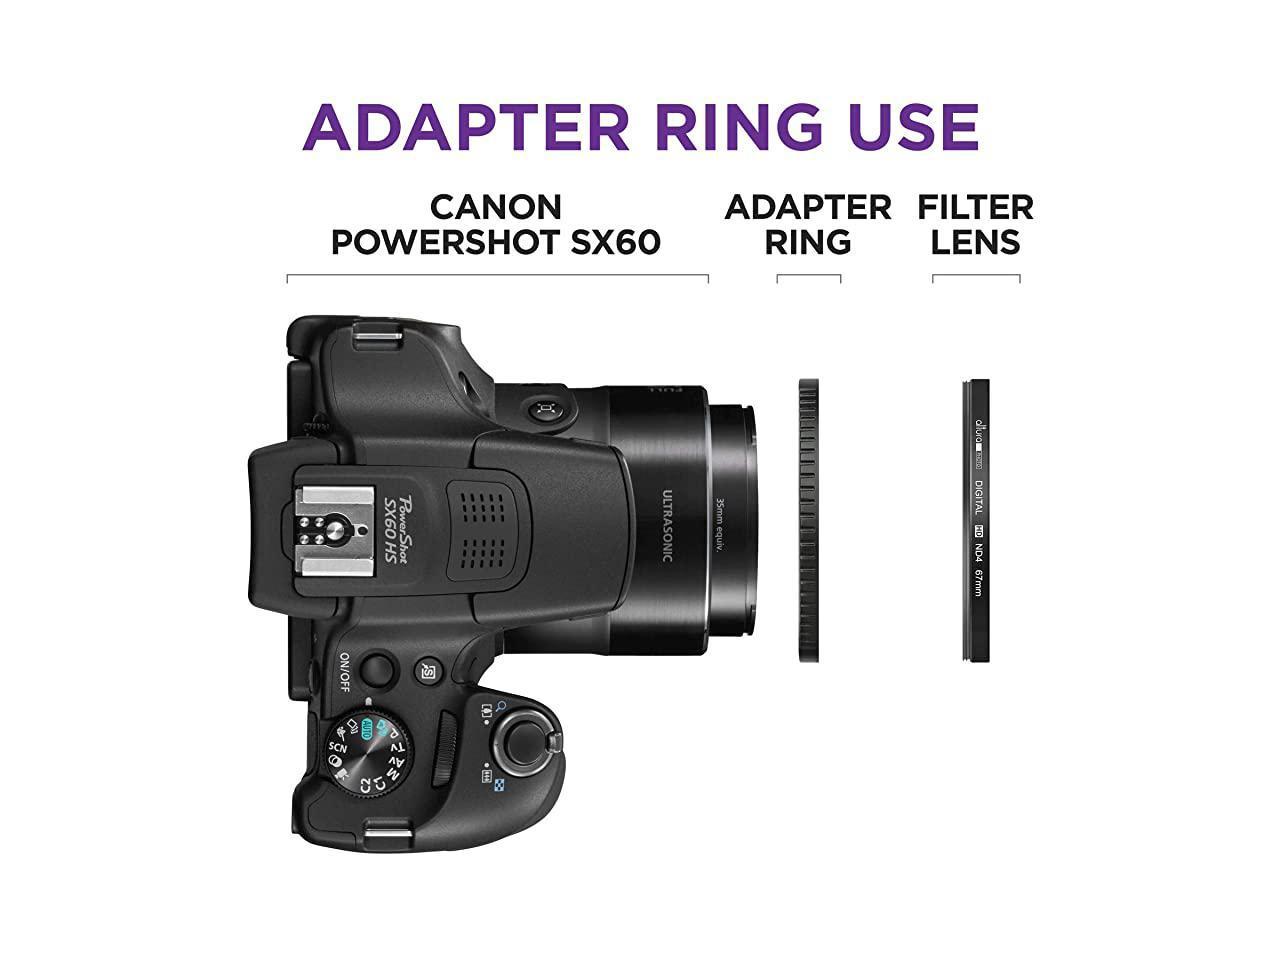 Micor Fiber Cloth For Canon Powershot SX40 HS Lens Pen LCD Screen Cleaner Kit 